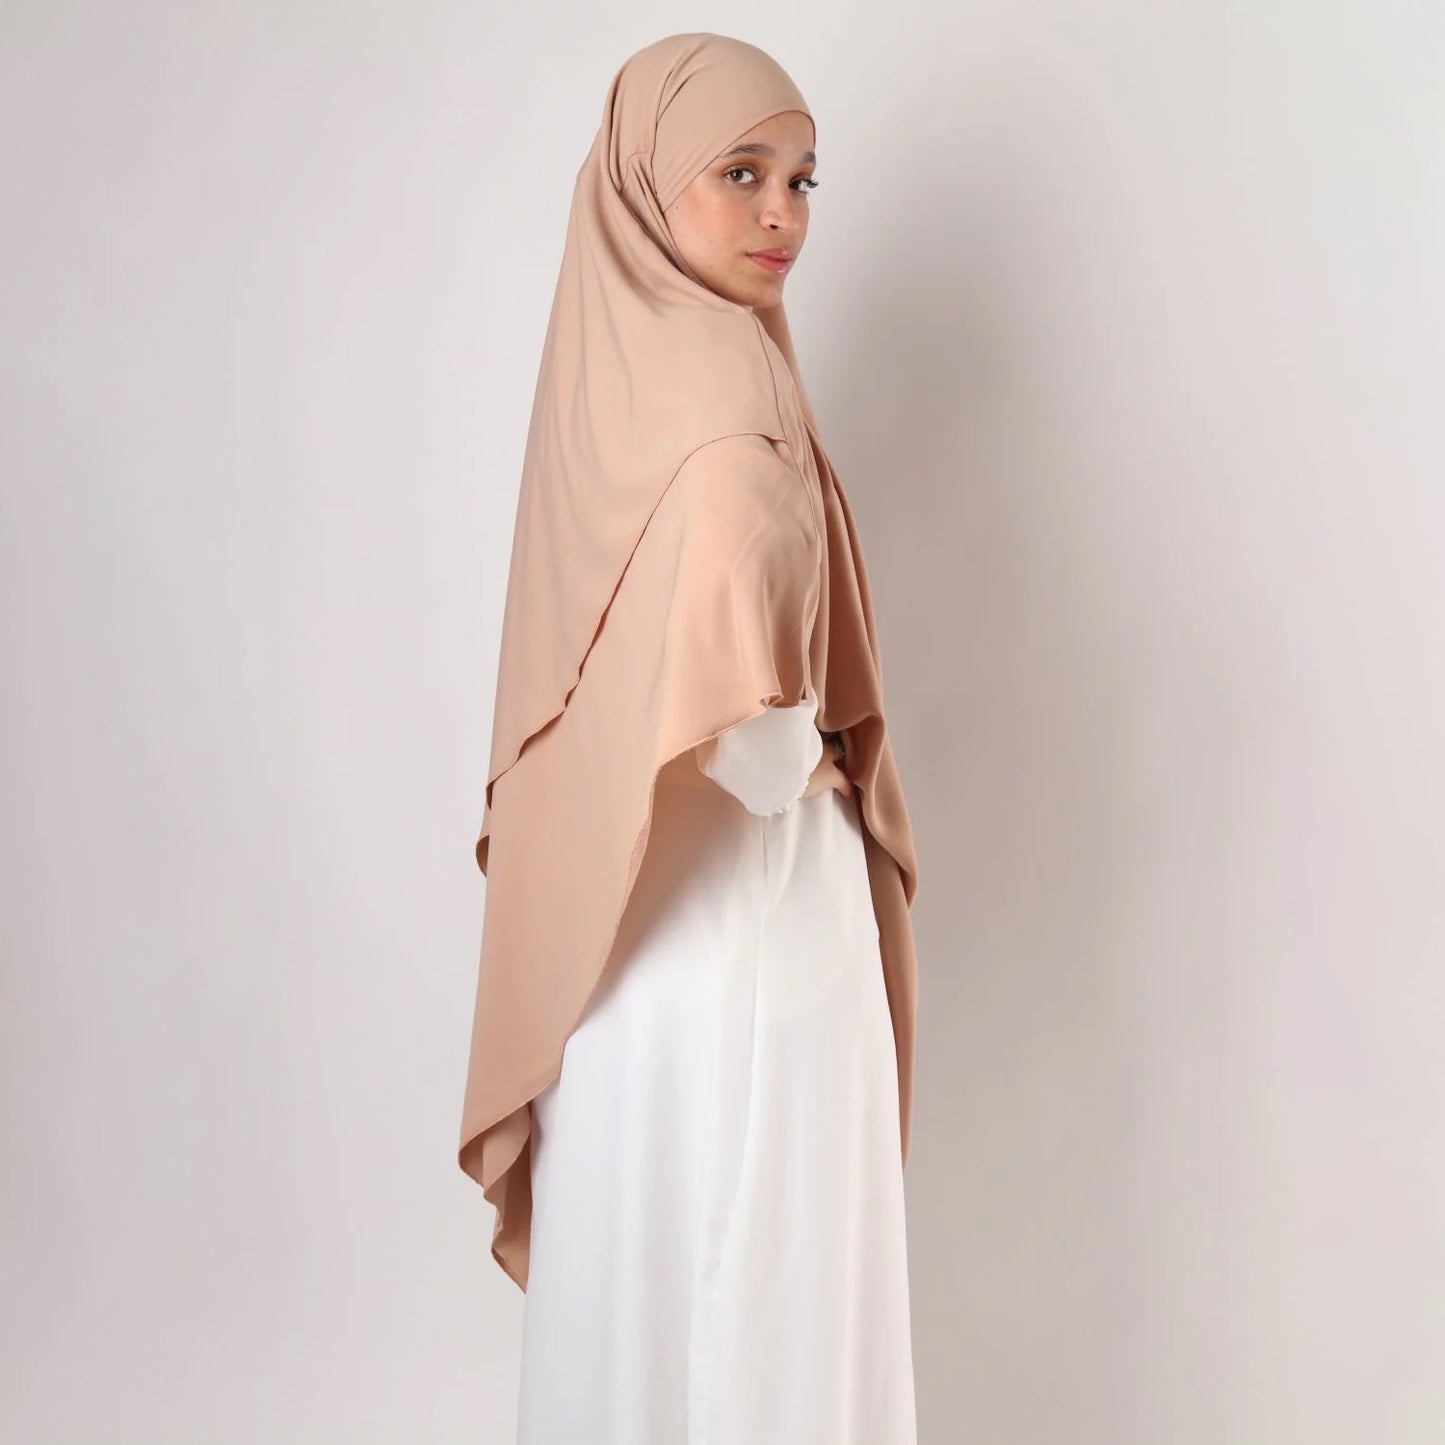 Khimar : 2 Layer Triangular Diamond Instant Khimar-Hijab-Jilbab for Girls & Women in Dark Beige Color | Tie Back Burkha Jilbab Khimar Style Abaya Hijab Niqab Islamic Modest Wear